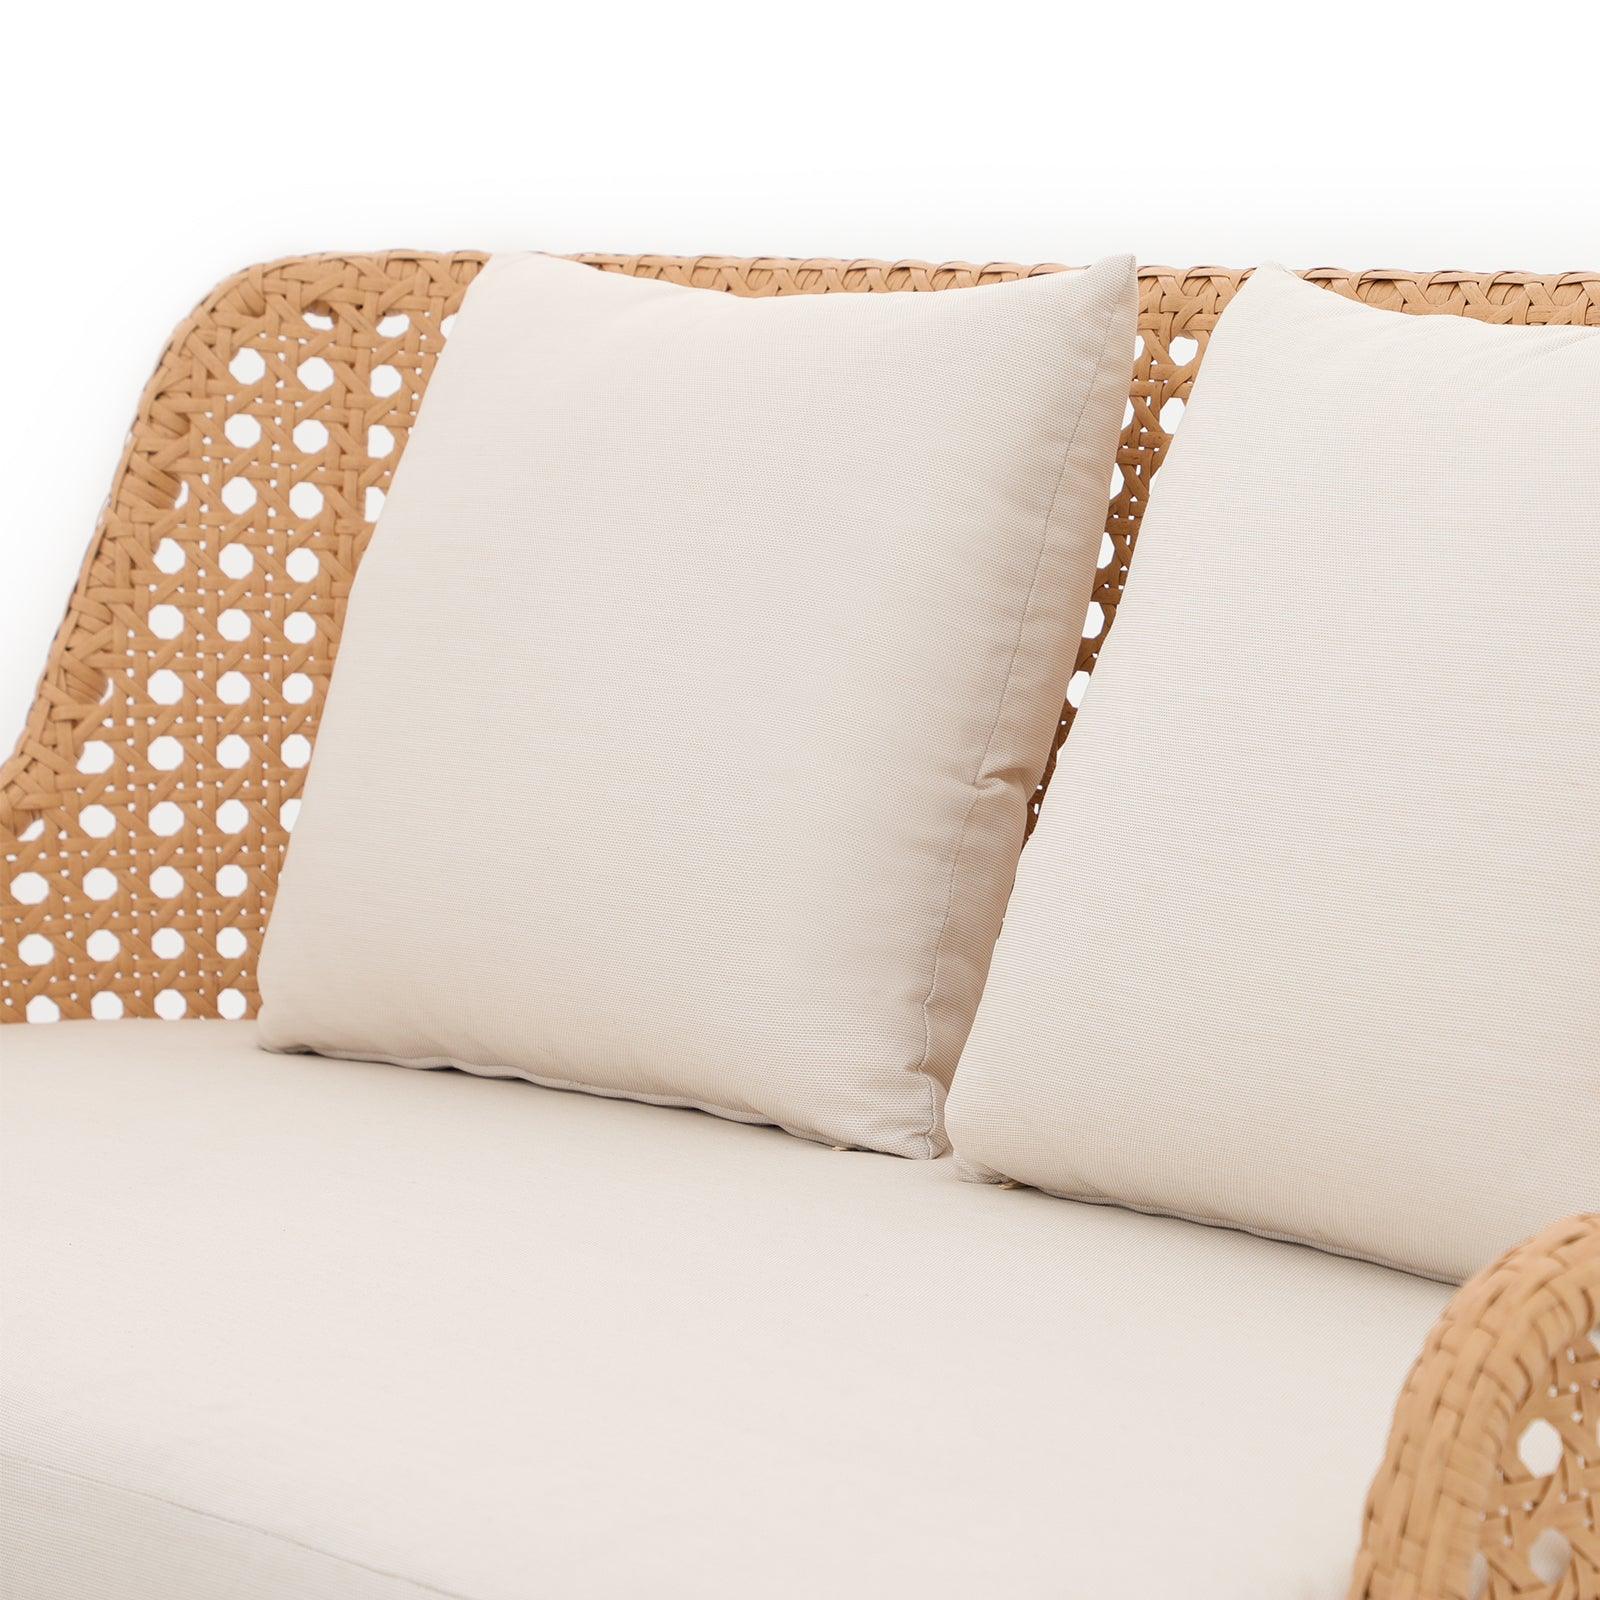 natural modern outdoor sofa cushion details